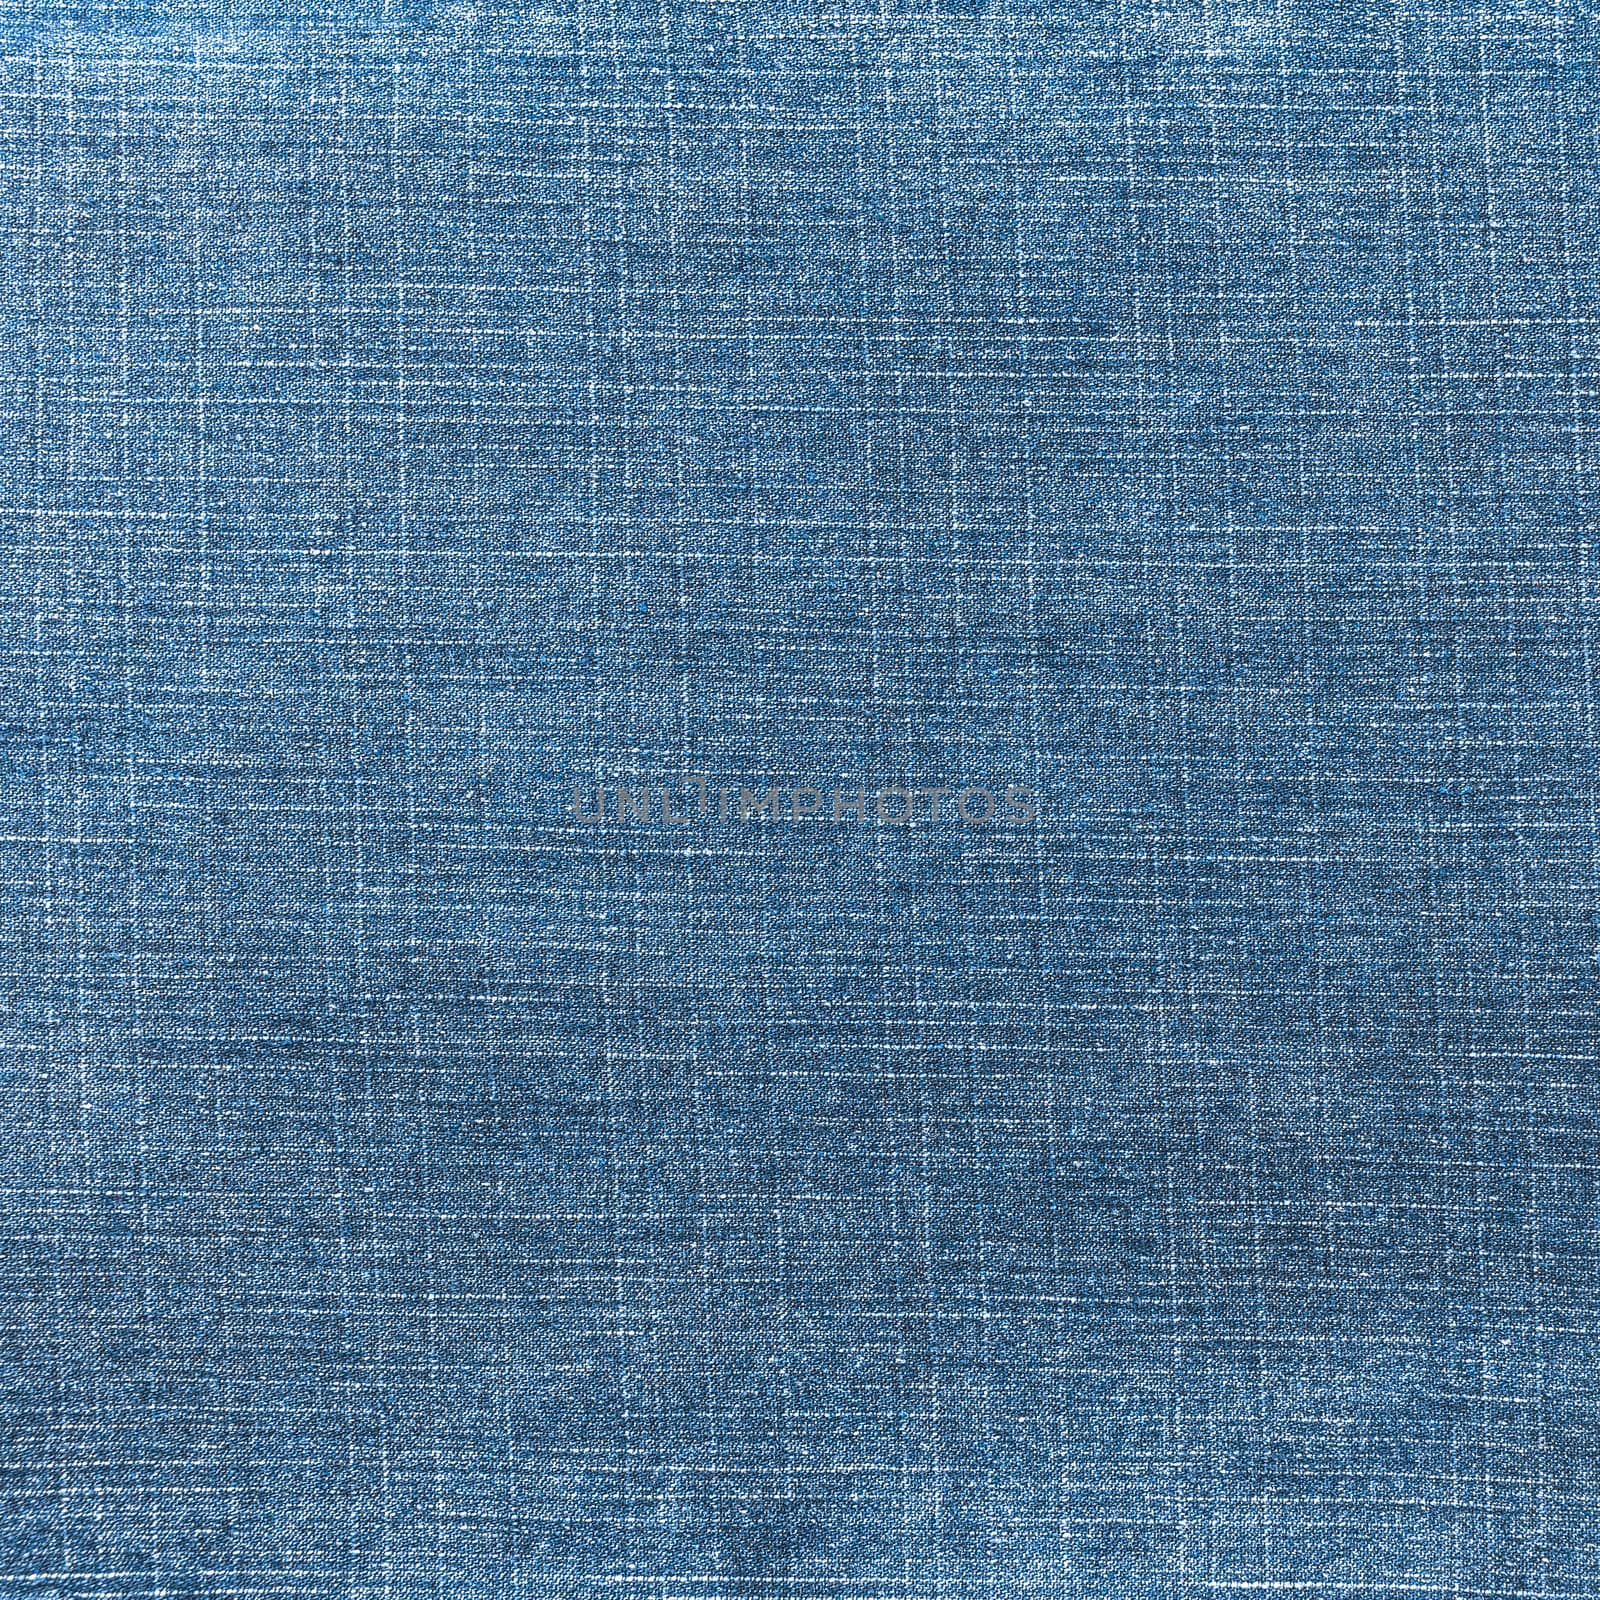 High resolution jeans denim blue texture or background .